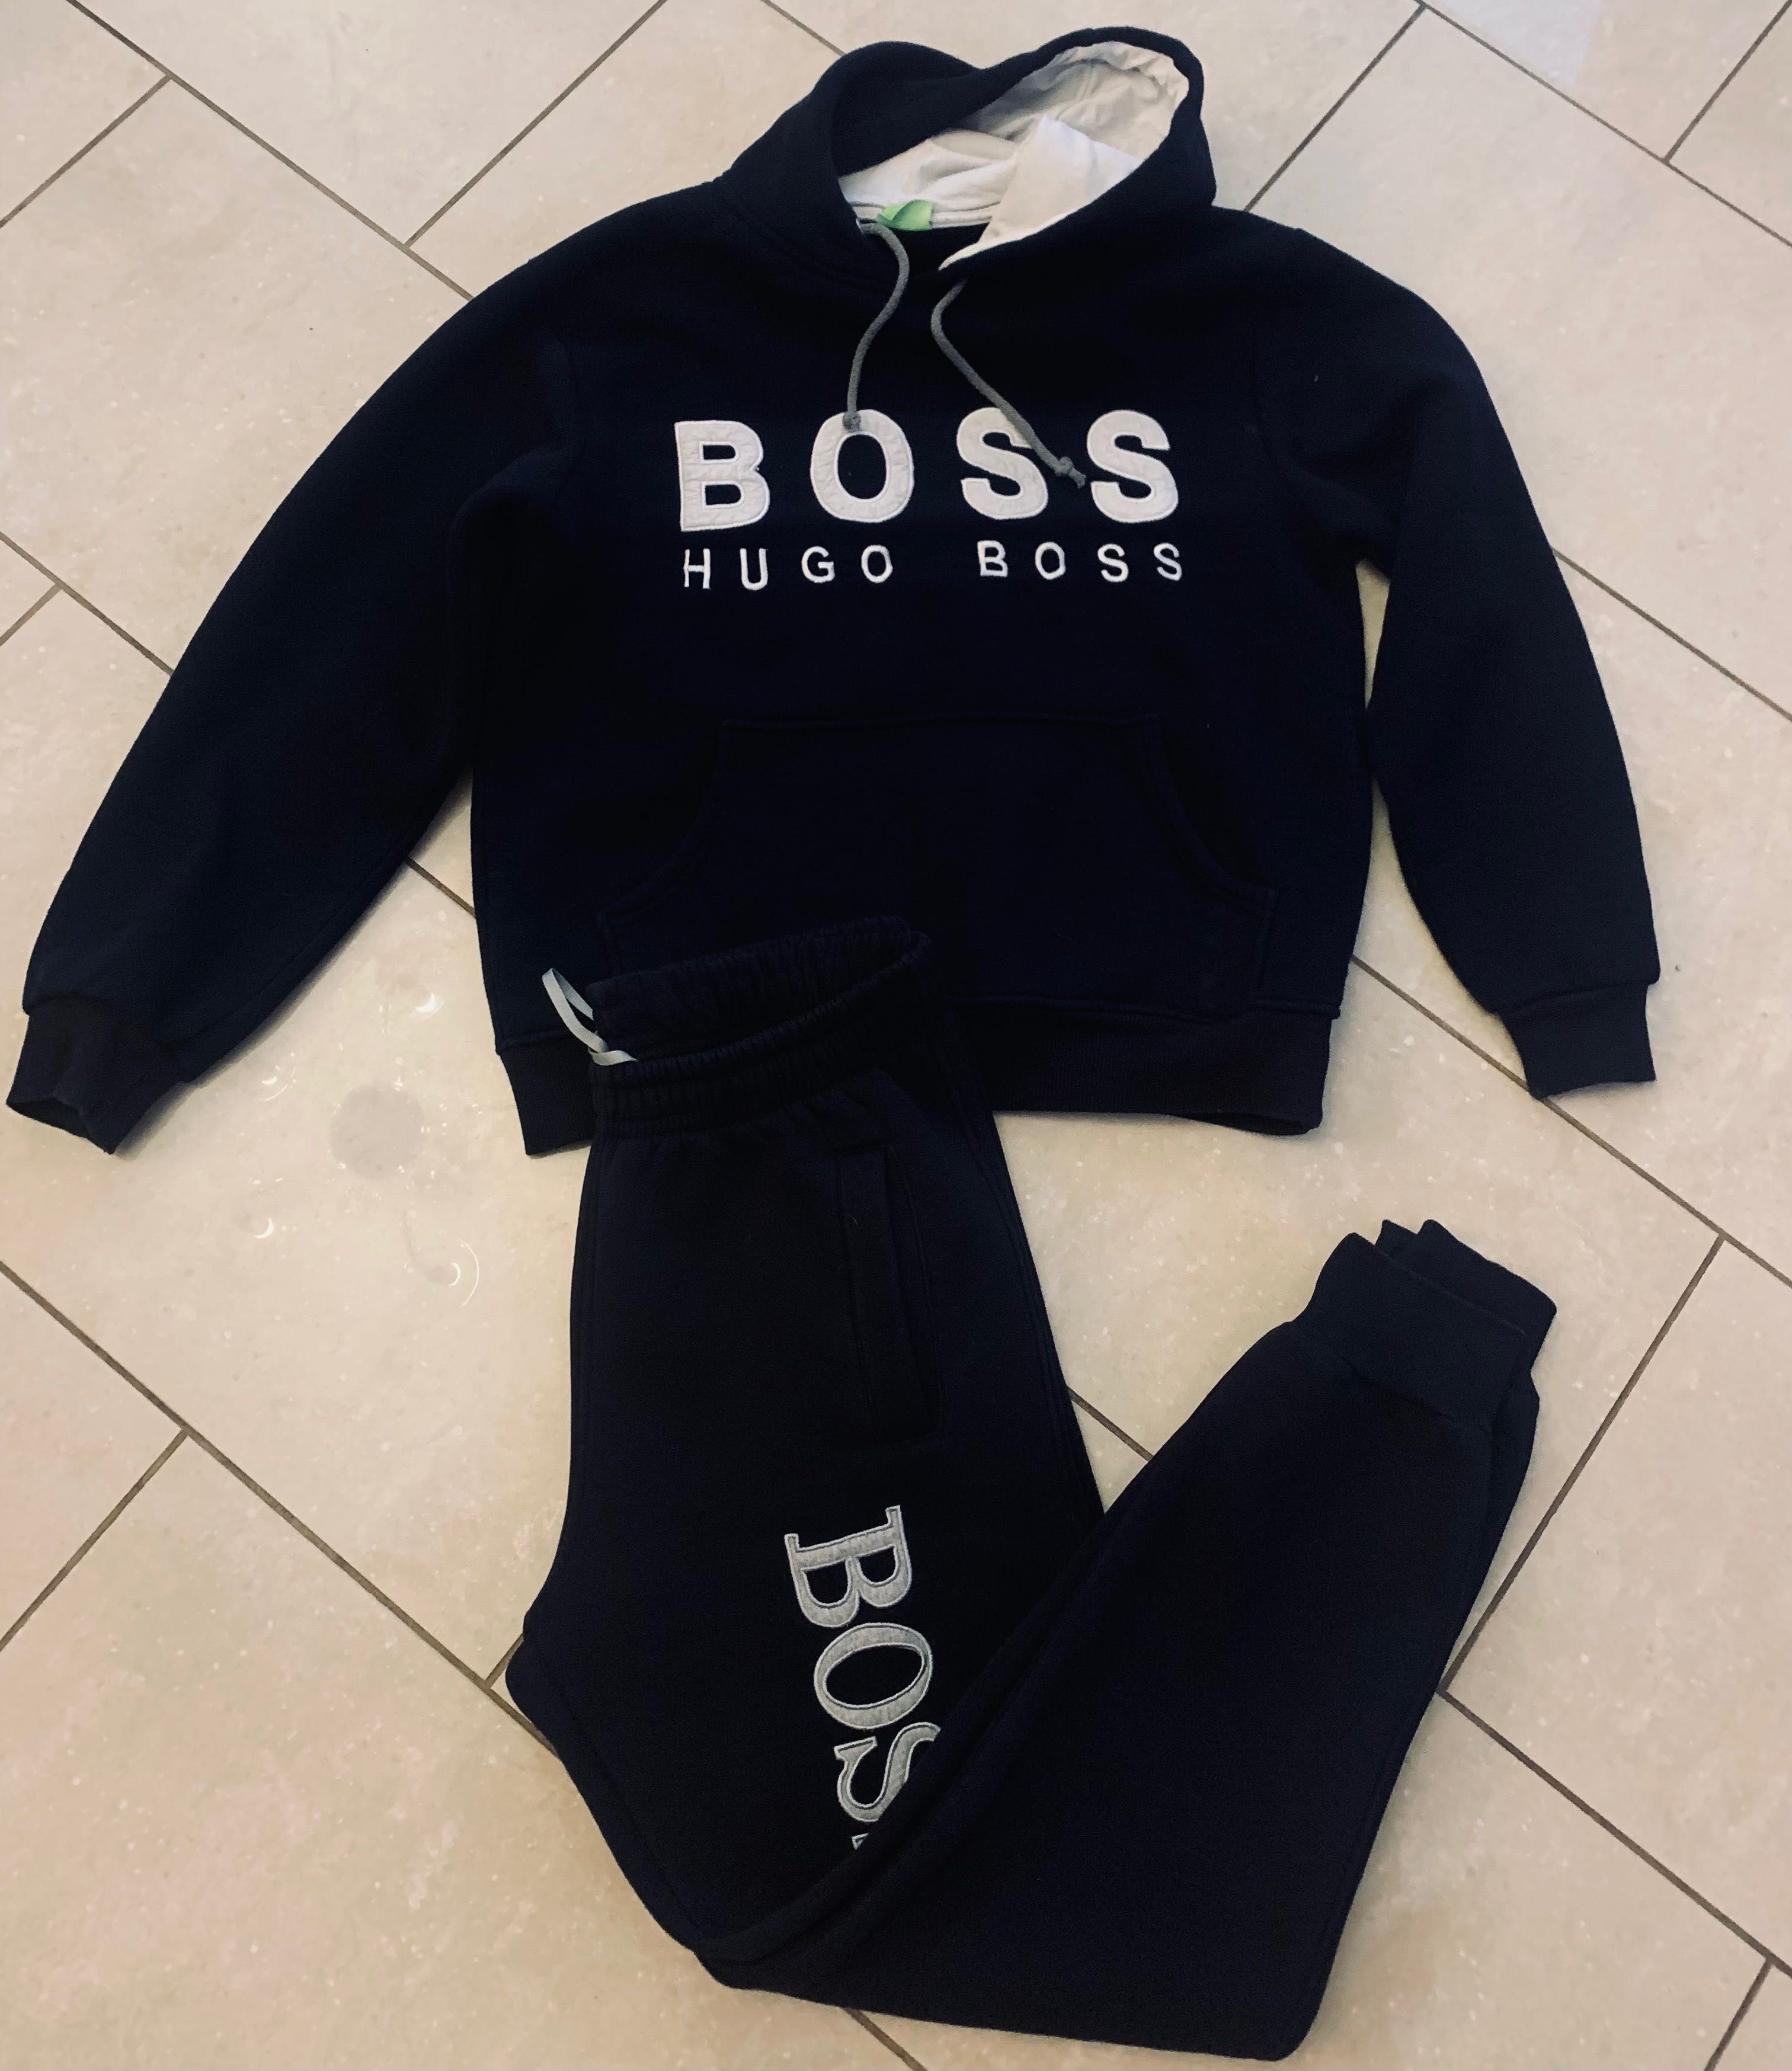 Hugo Boss damski dres damski- komplet bluza+spodnie r. M/L bawełna